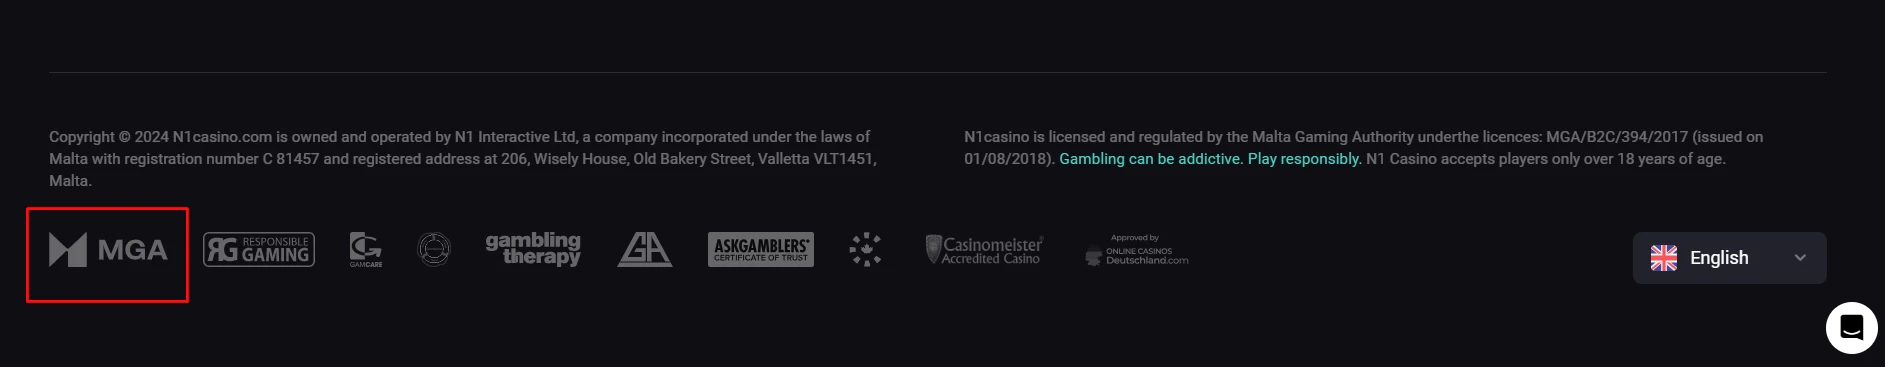 N1 Casino License